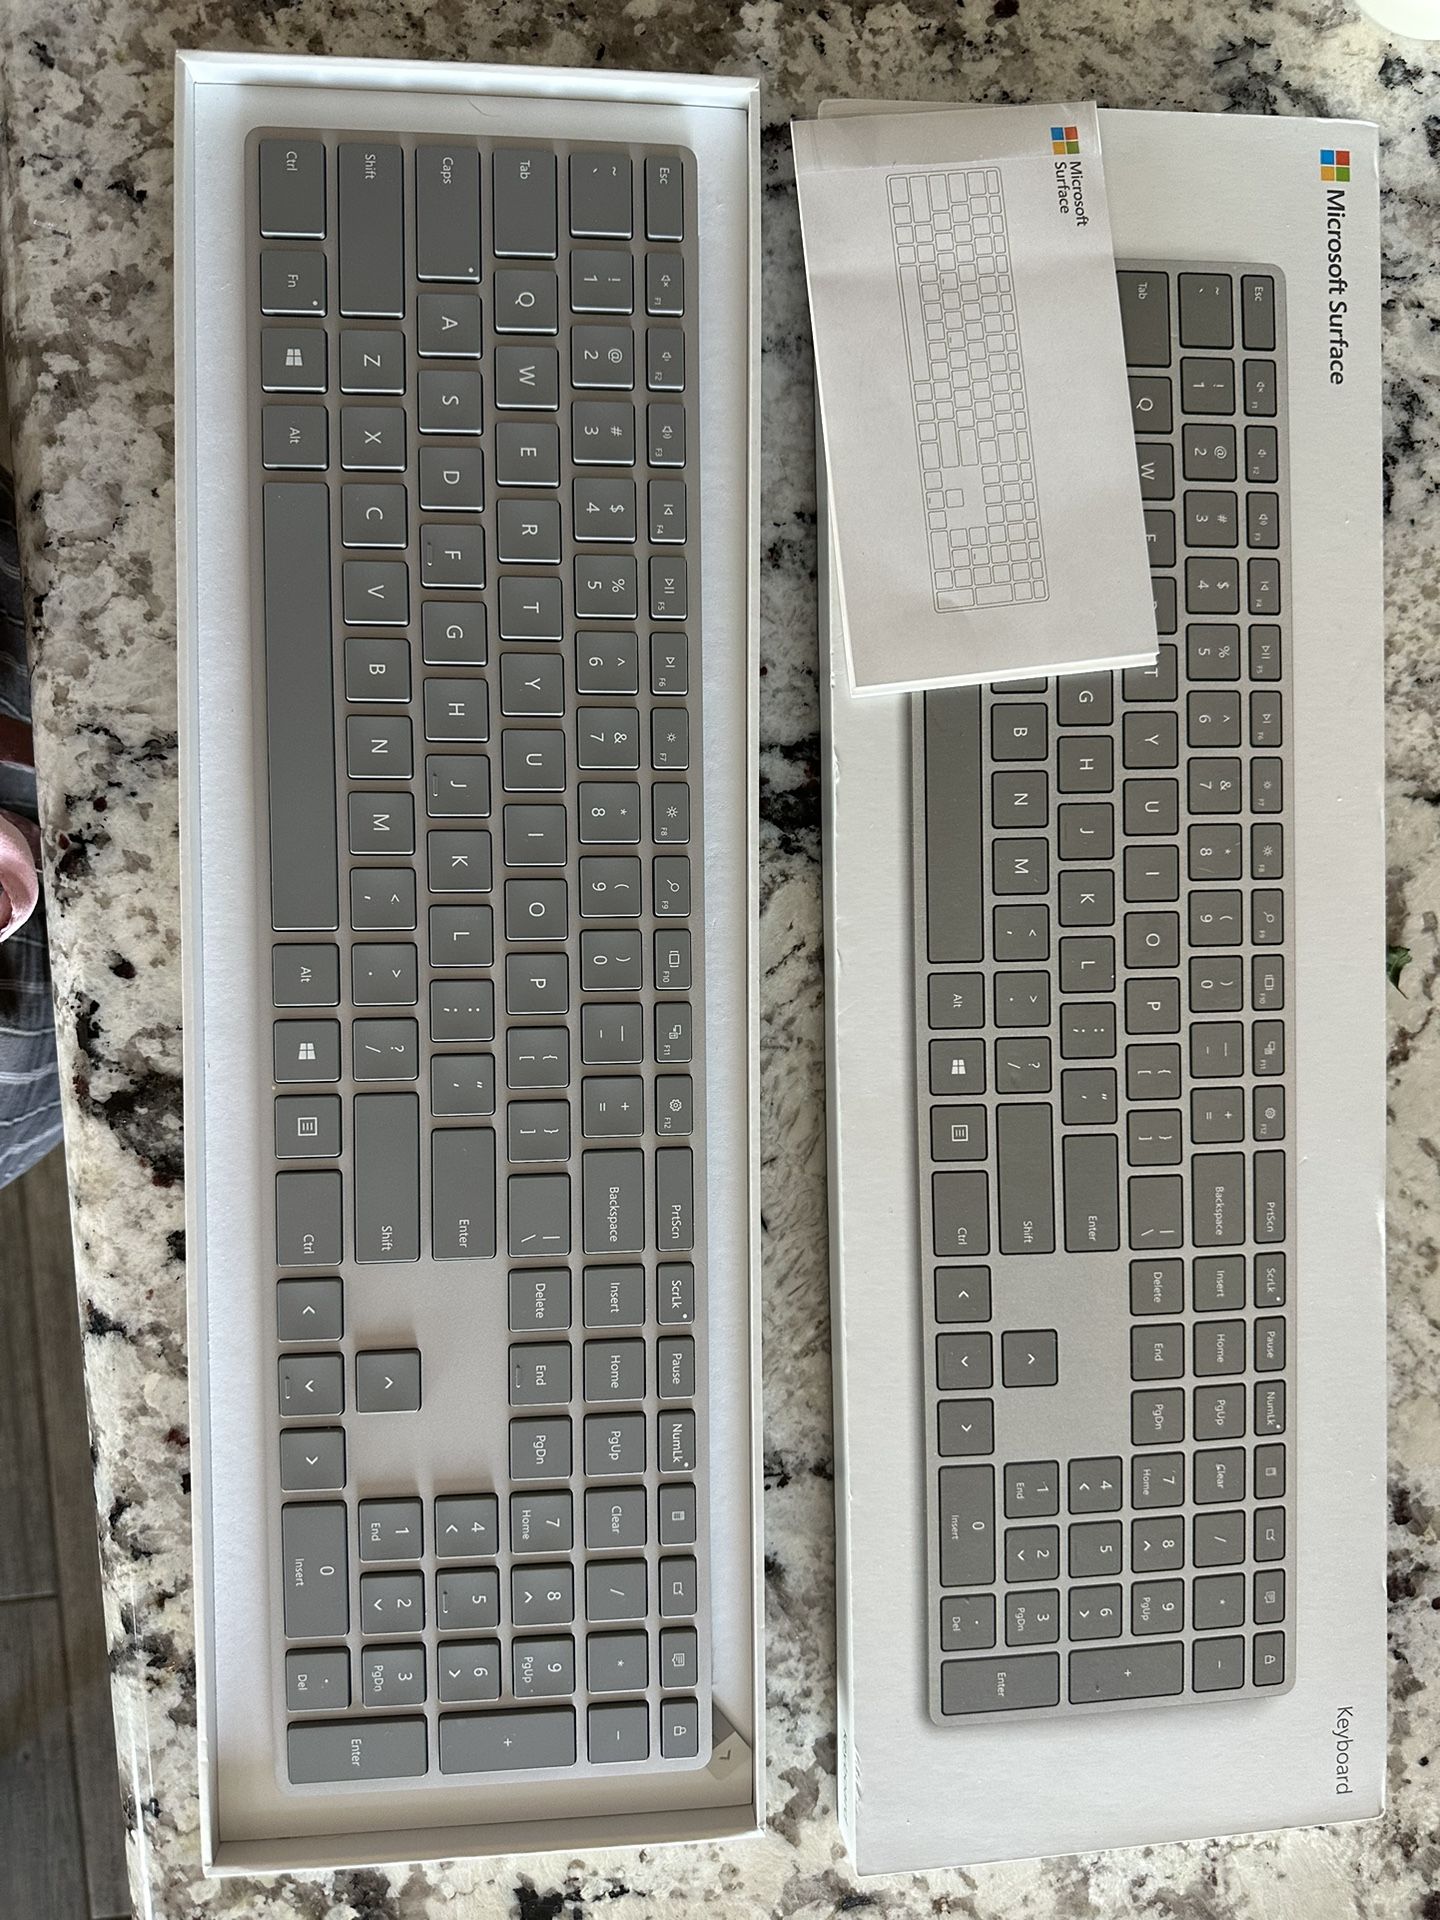 Microsoft Surface keyboard 